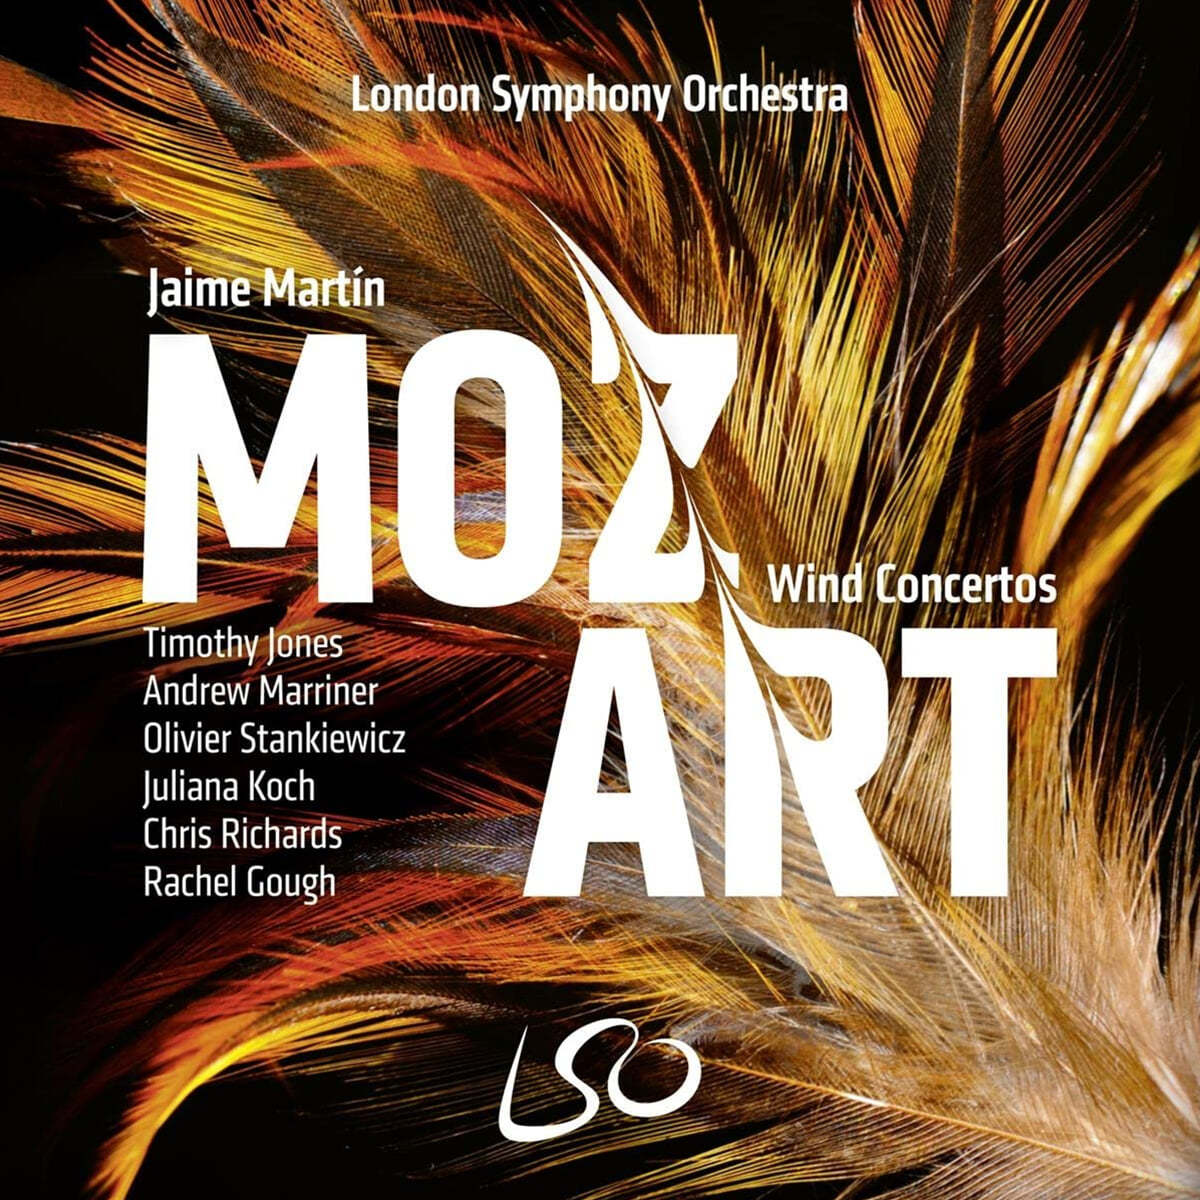 Jaime Martin 모차르트: 관악 협주곡집 (Mozart: Wind Concertos) 